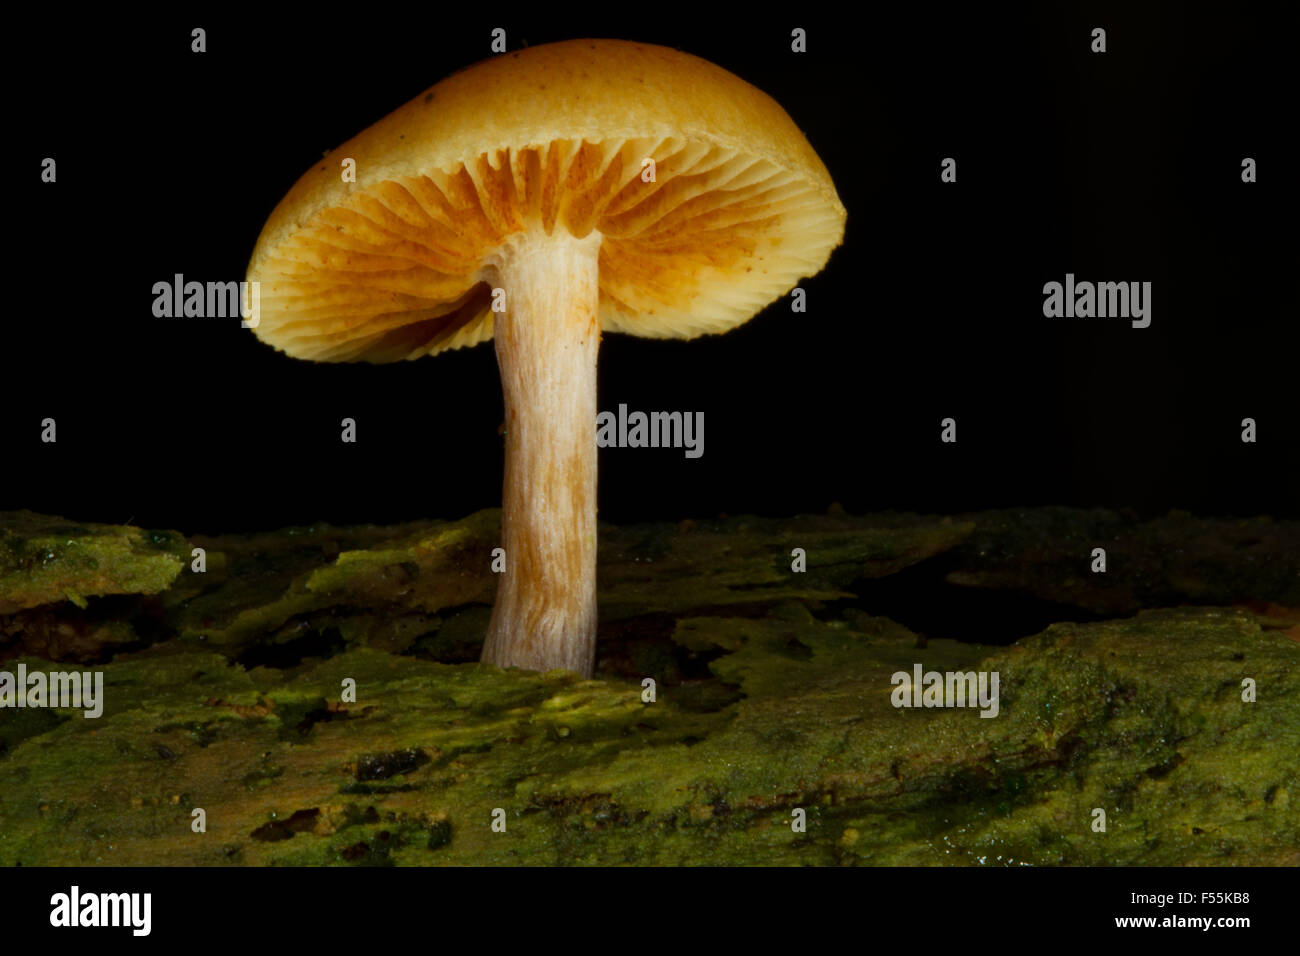 Tiny mushroom, probablemente Psathyrella piluliformis, creciendo sobre madera podrida Foto de stock